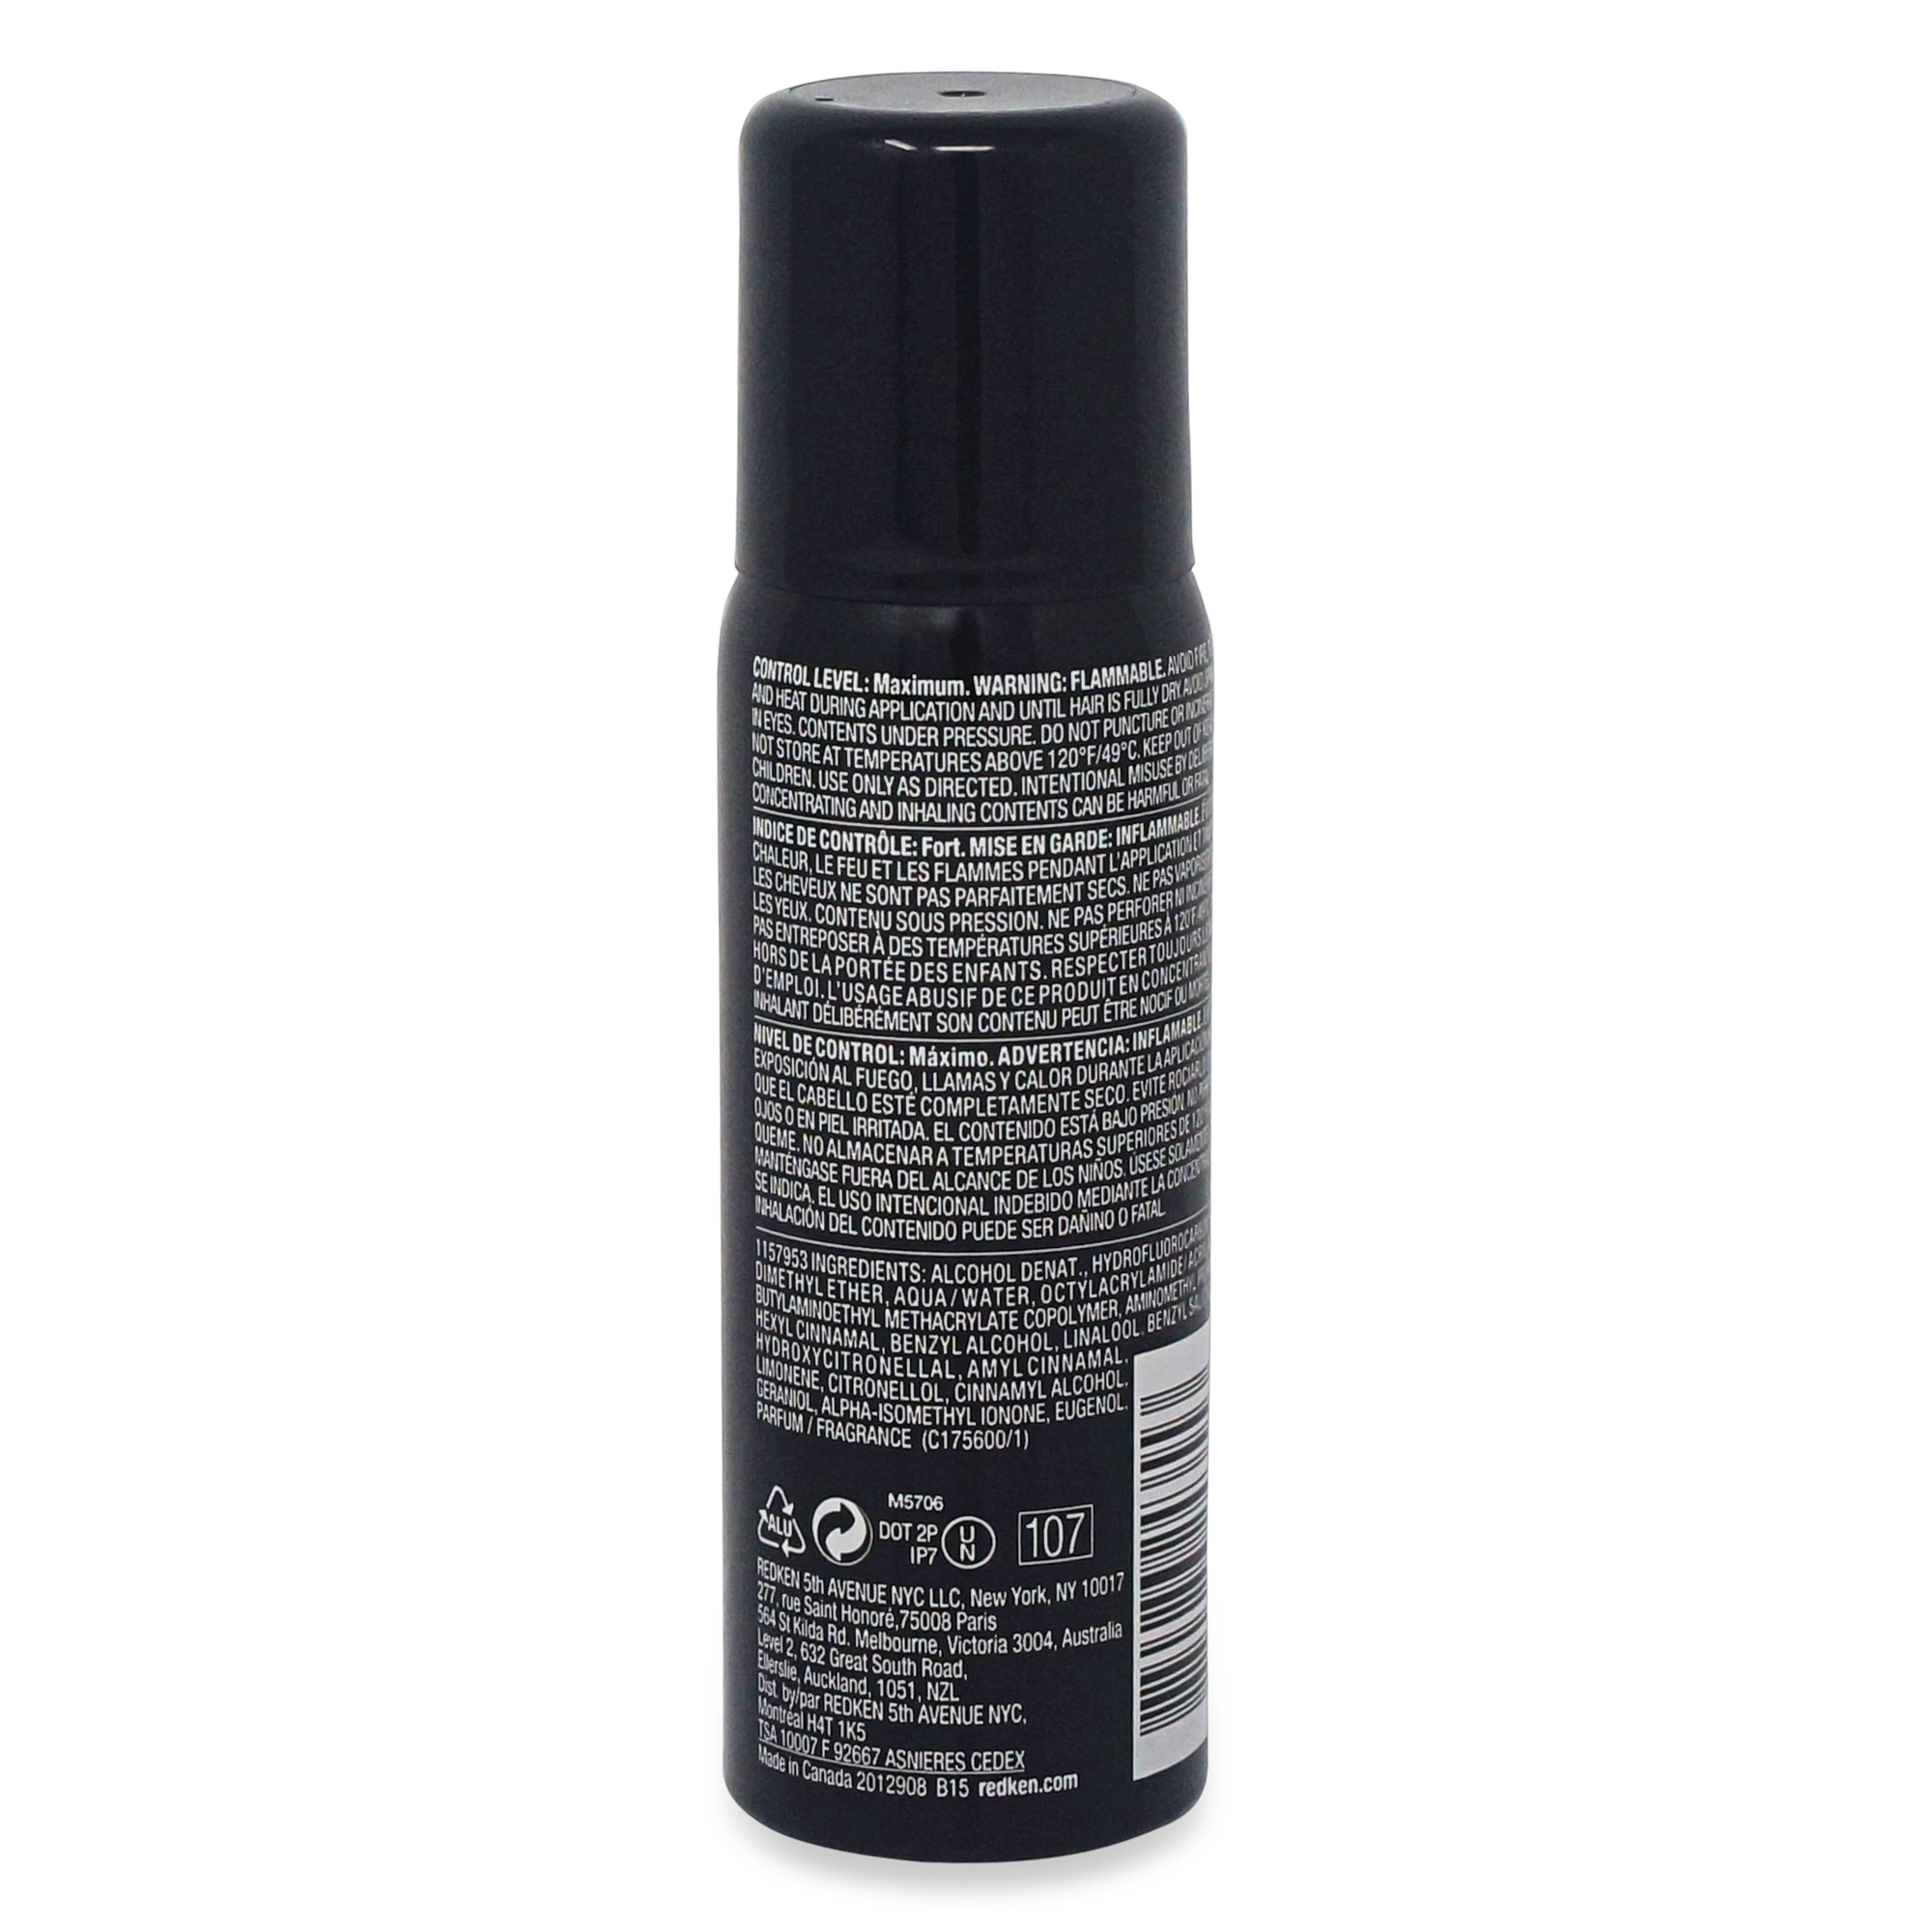 Redken Quick Dry #18 Hair Spray 2 oz - image 2 of 2